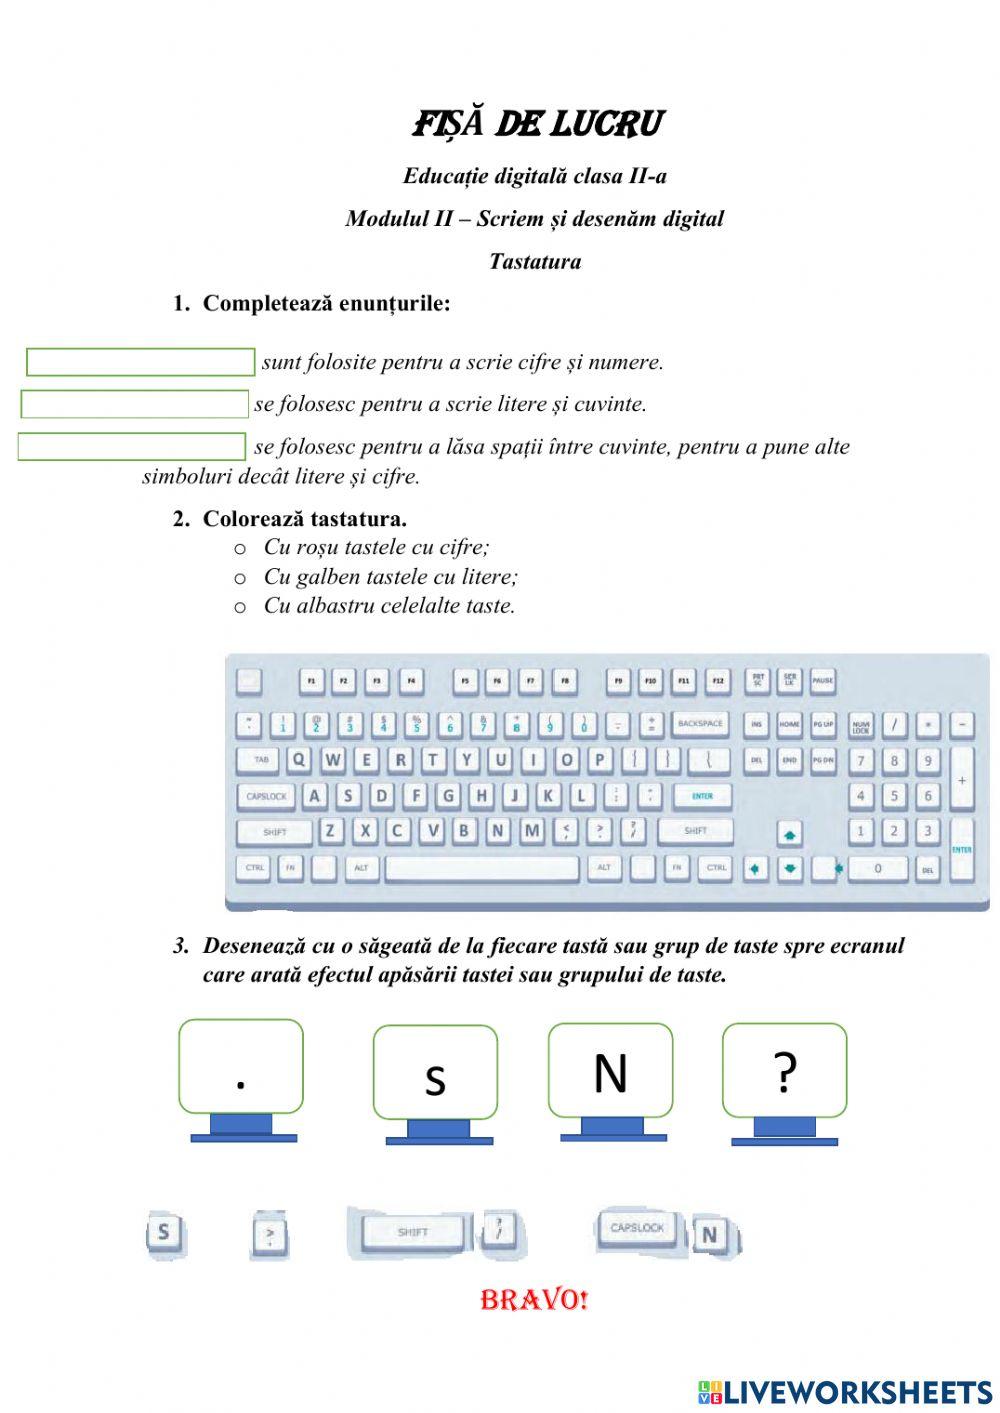 Tastatura activity | Live Worksheets